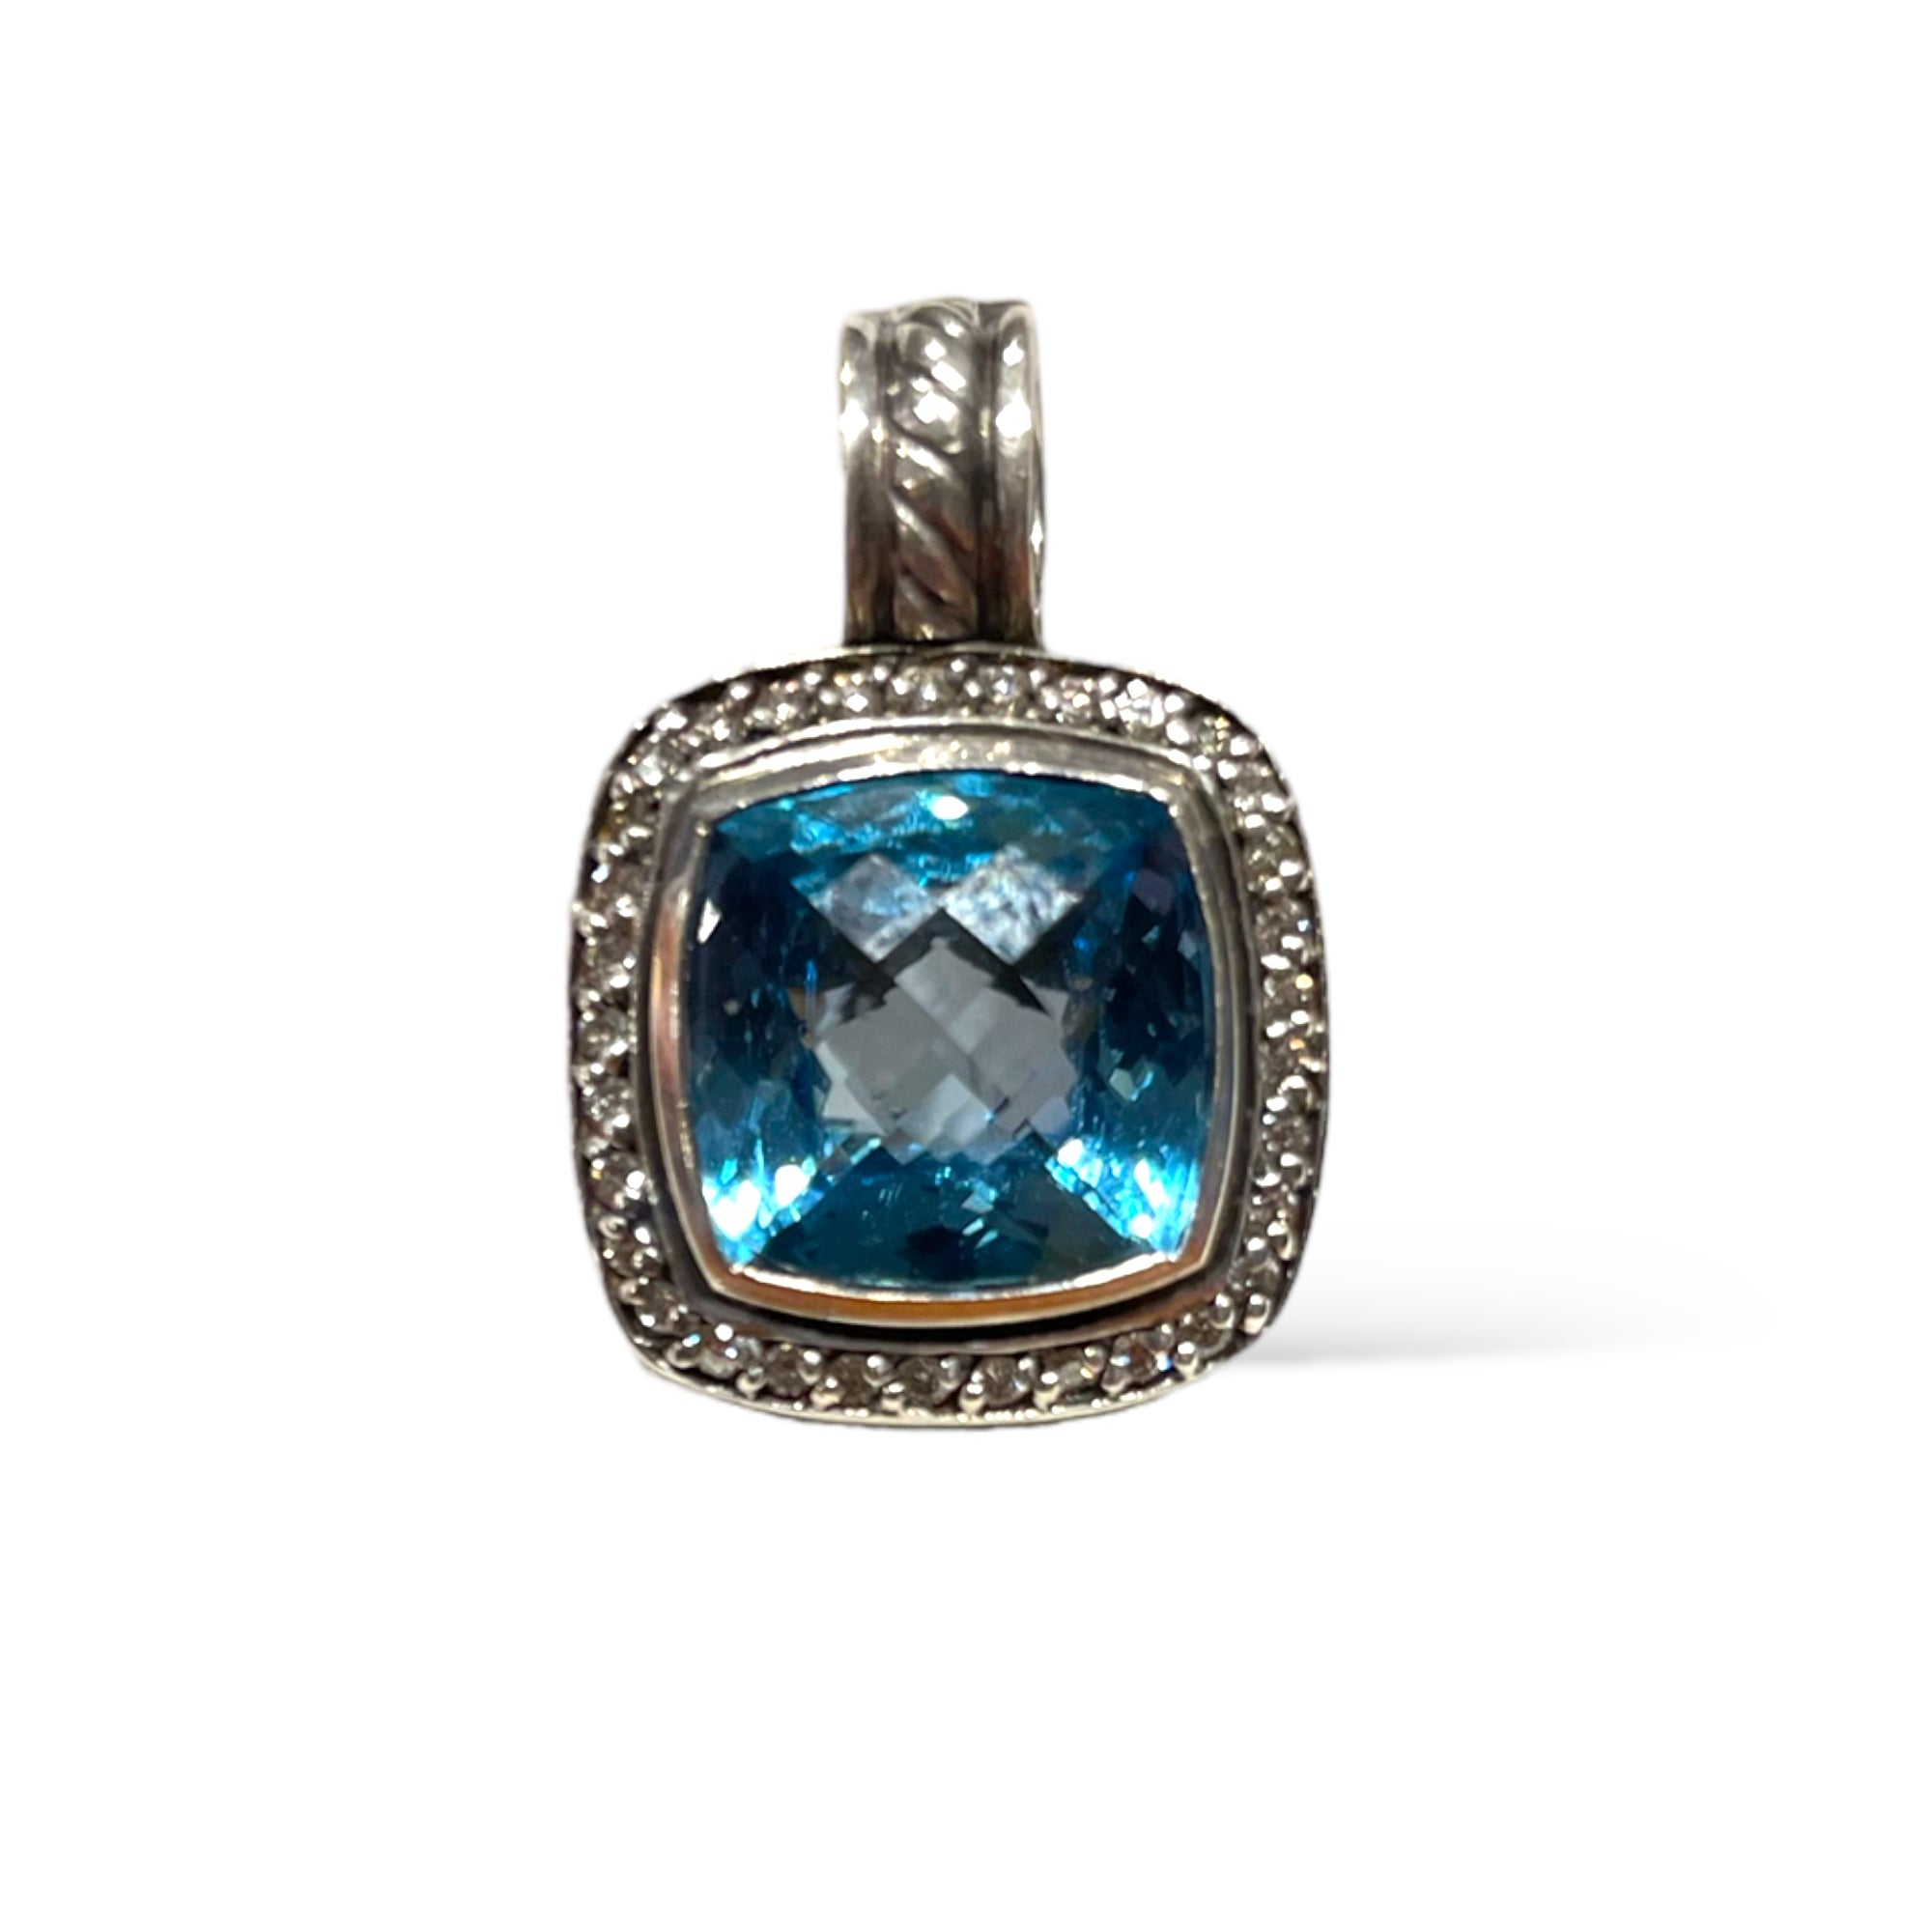 DAVID YURMAN Albion Pendant in Sterling Silver with Blue Topaz & Pavé Diamonds